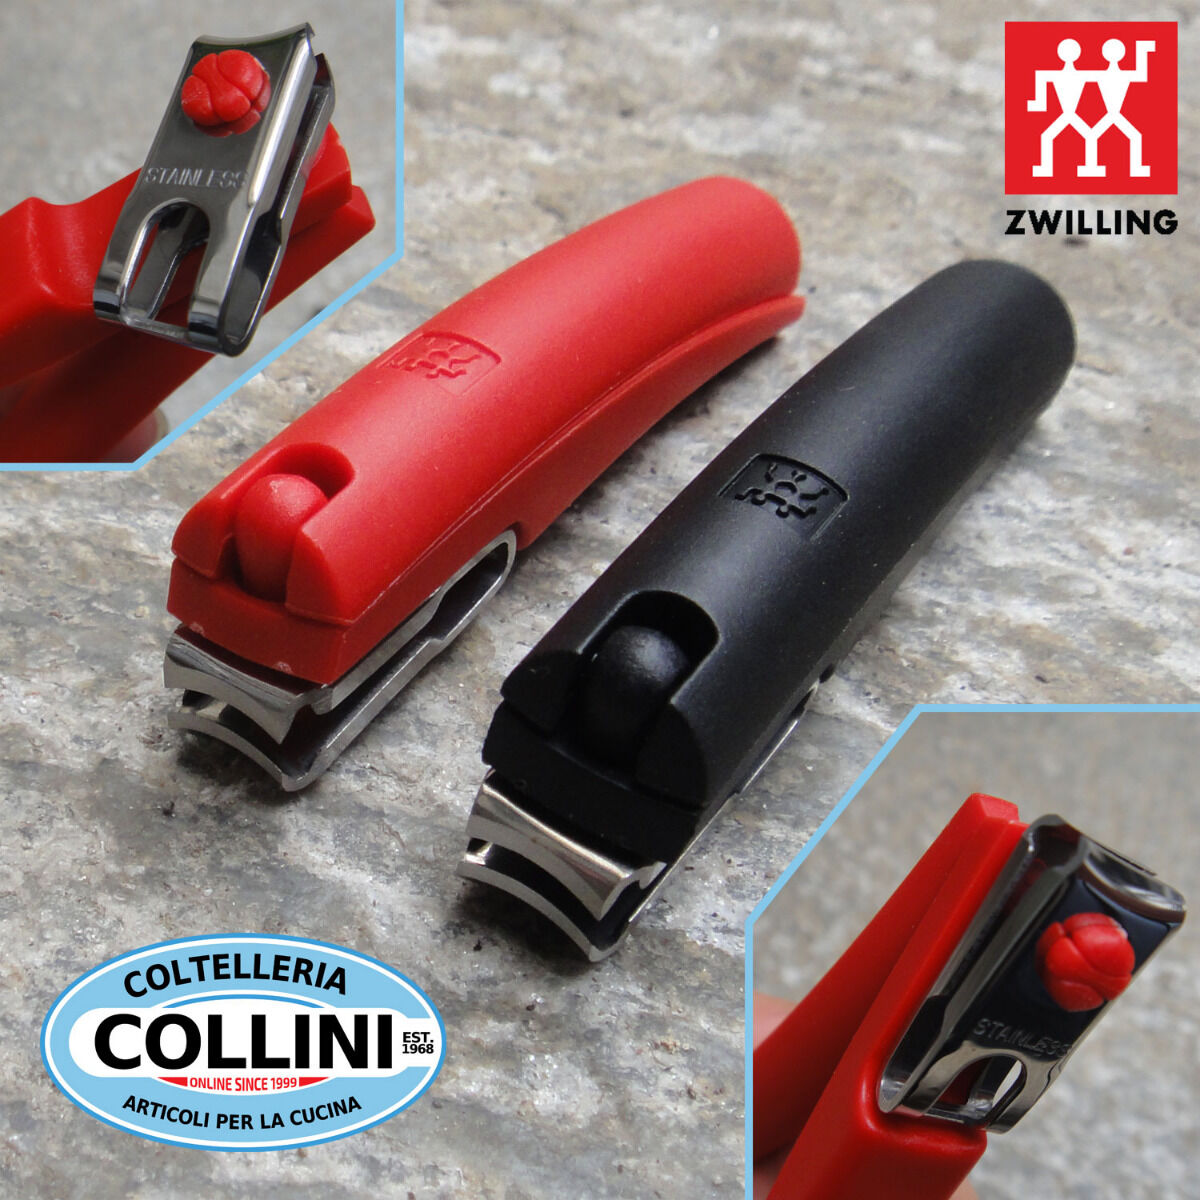 https://www.coltelleriacollini.com/media/catalog/product/cache/2d742e981ffa5c28990fe05a9b6044c9/image/33180856/zwilling-nail-clipper-with-360-rotating-head.jpg